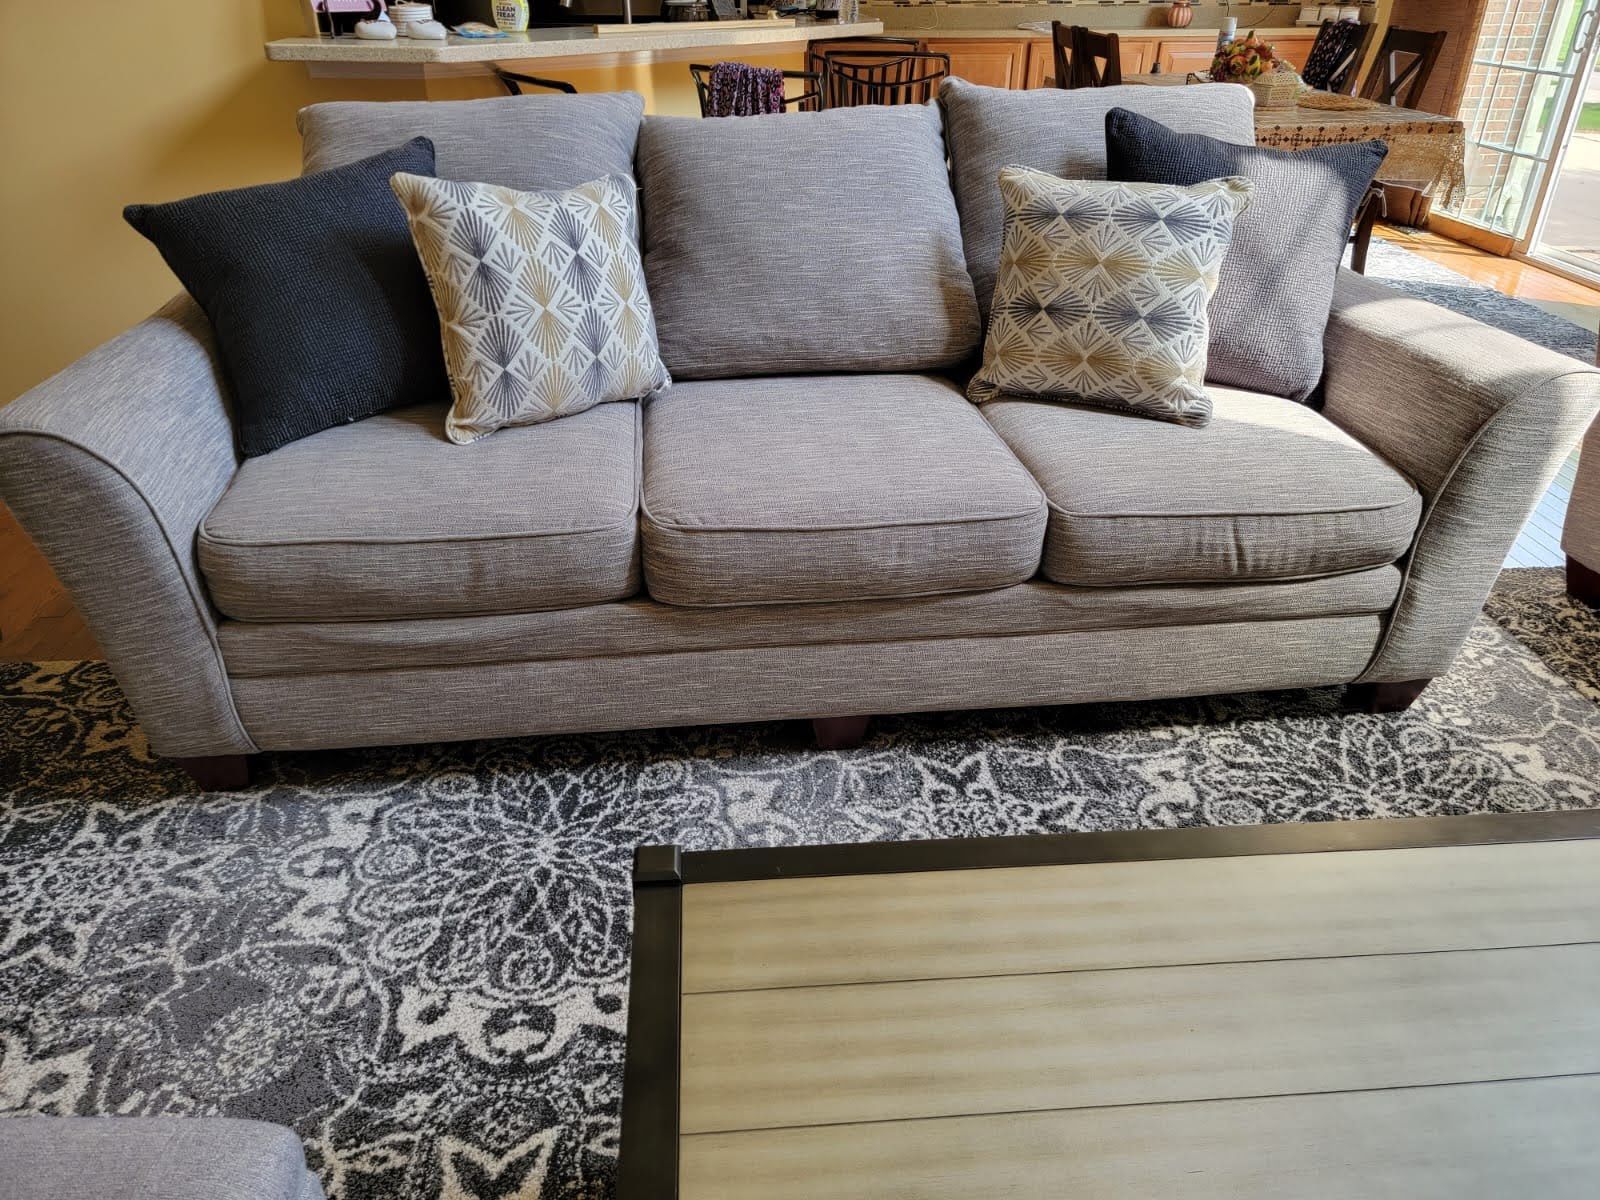 Complete Living Room Set Like New Super Clean